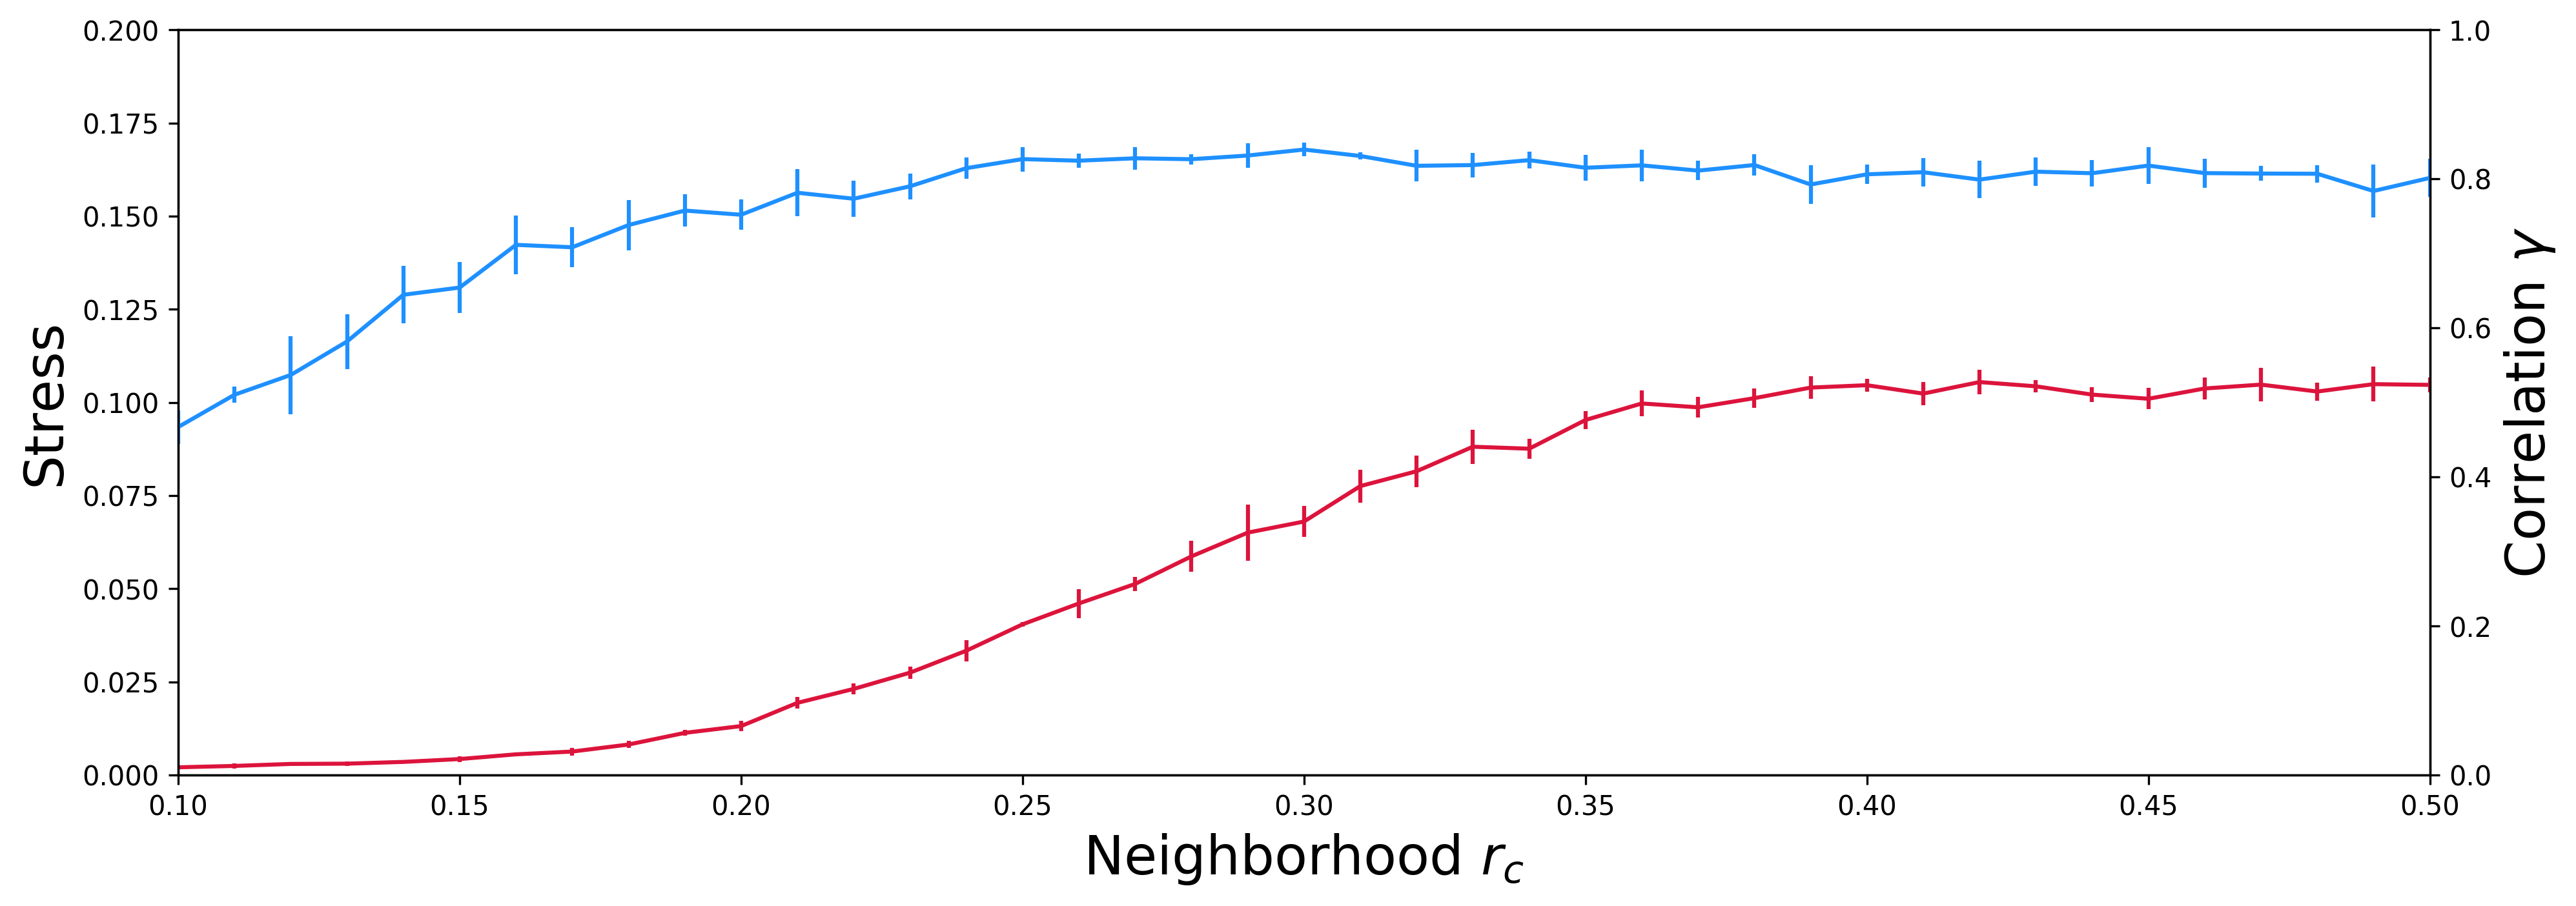 _images/r_neighbor_vs_stress-correlation.png